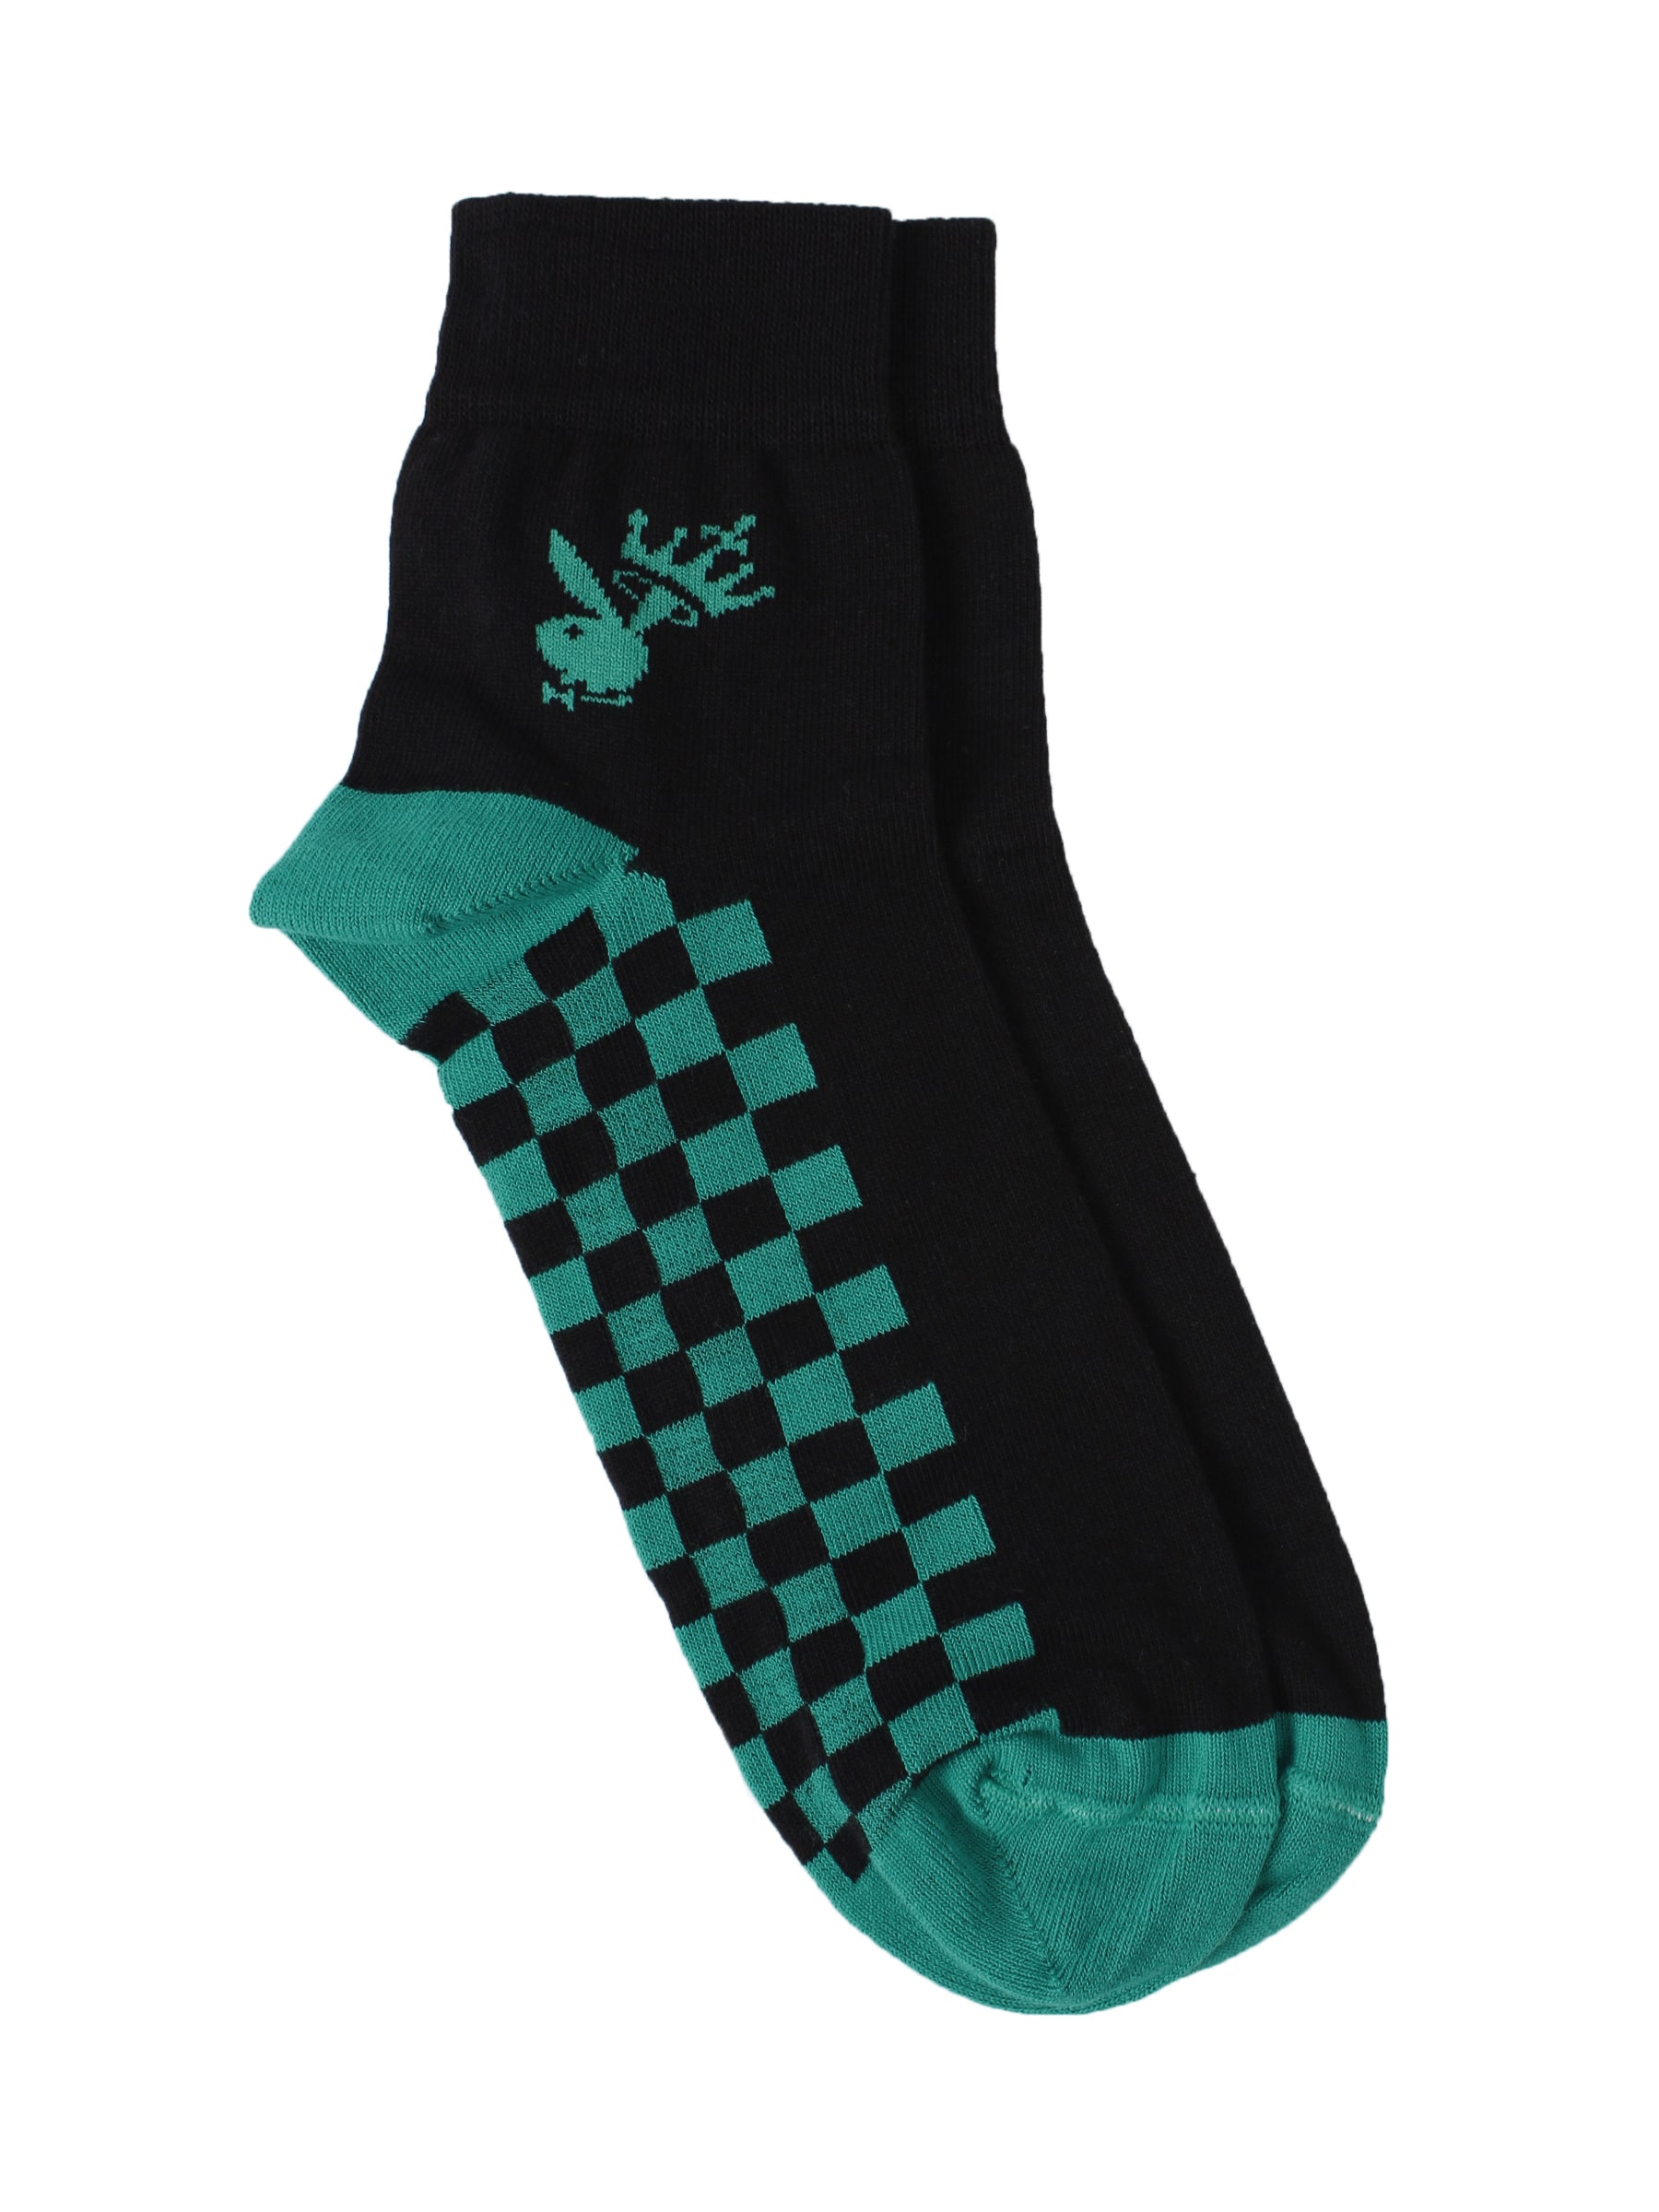 Playboy Men Black & Green Socks